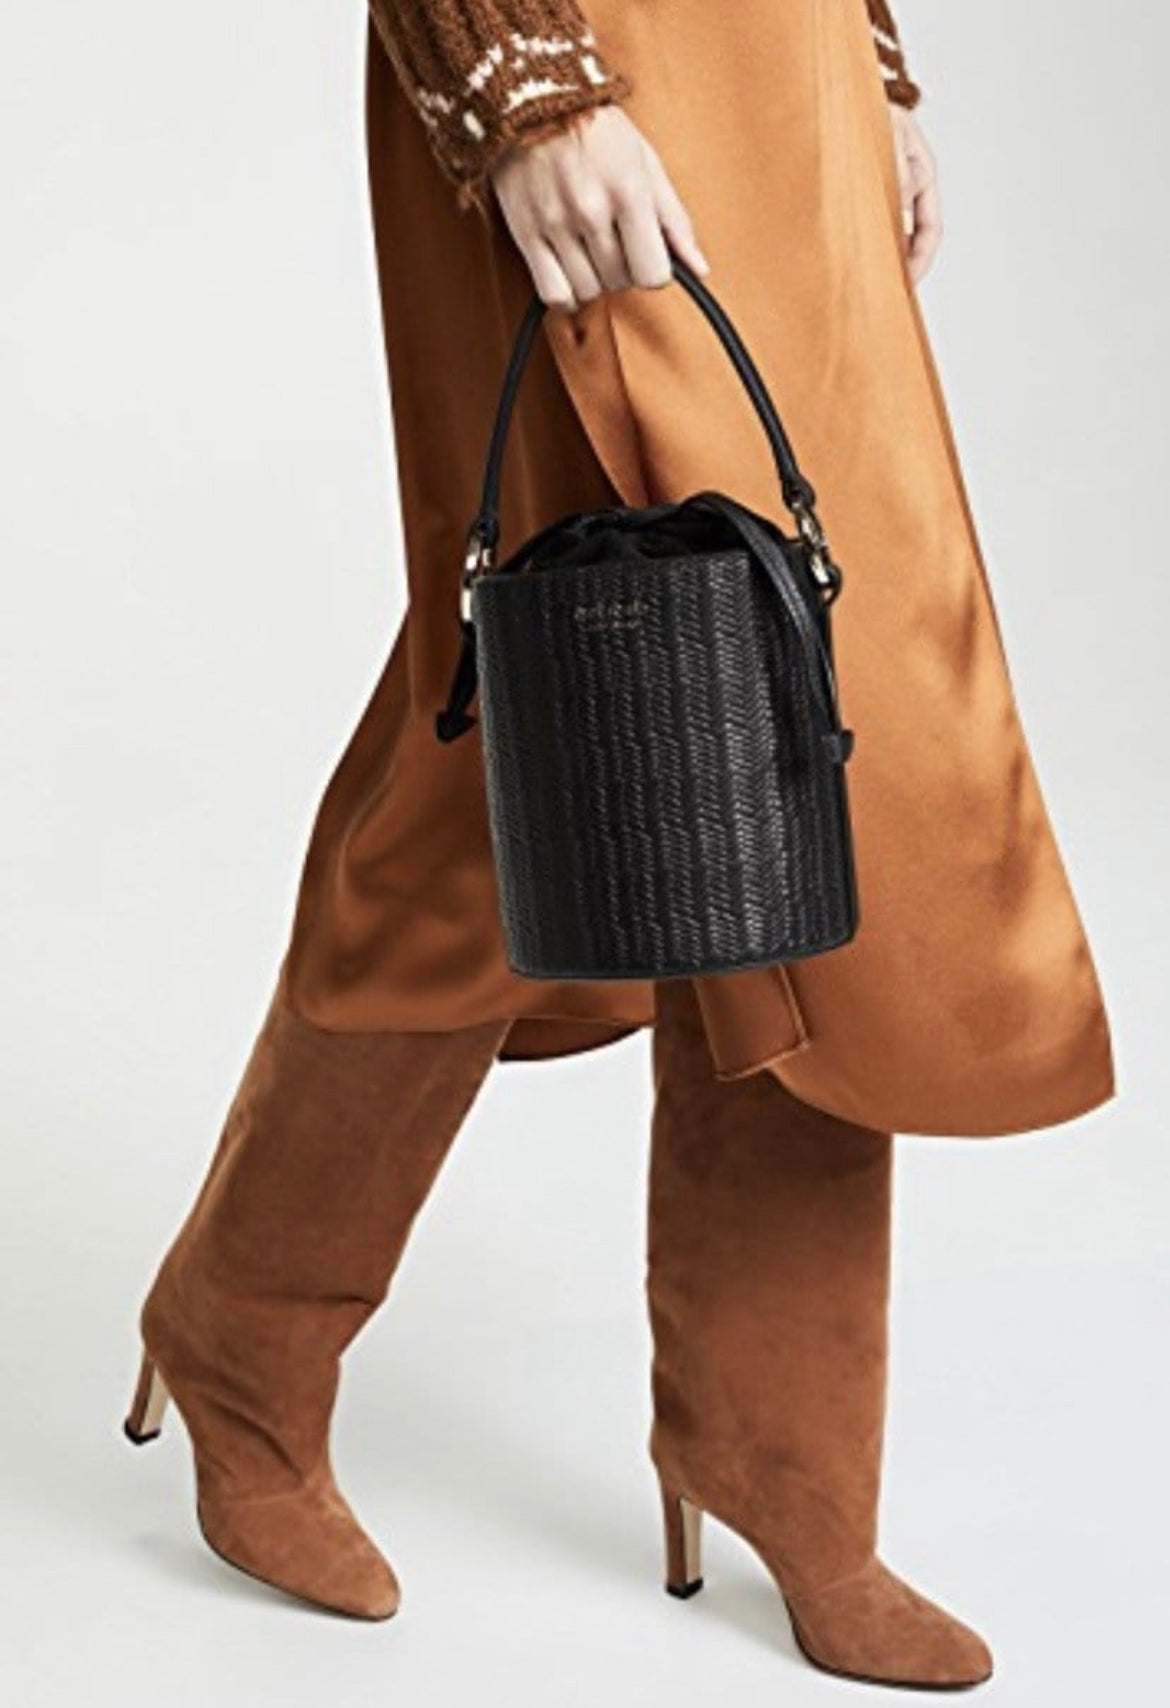 Meli Melo Leather Smooth Buckert Bag